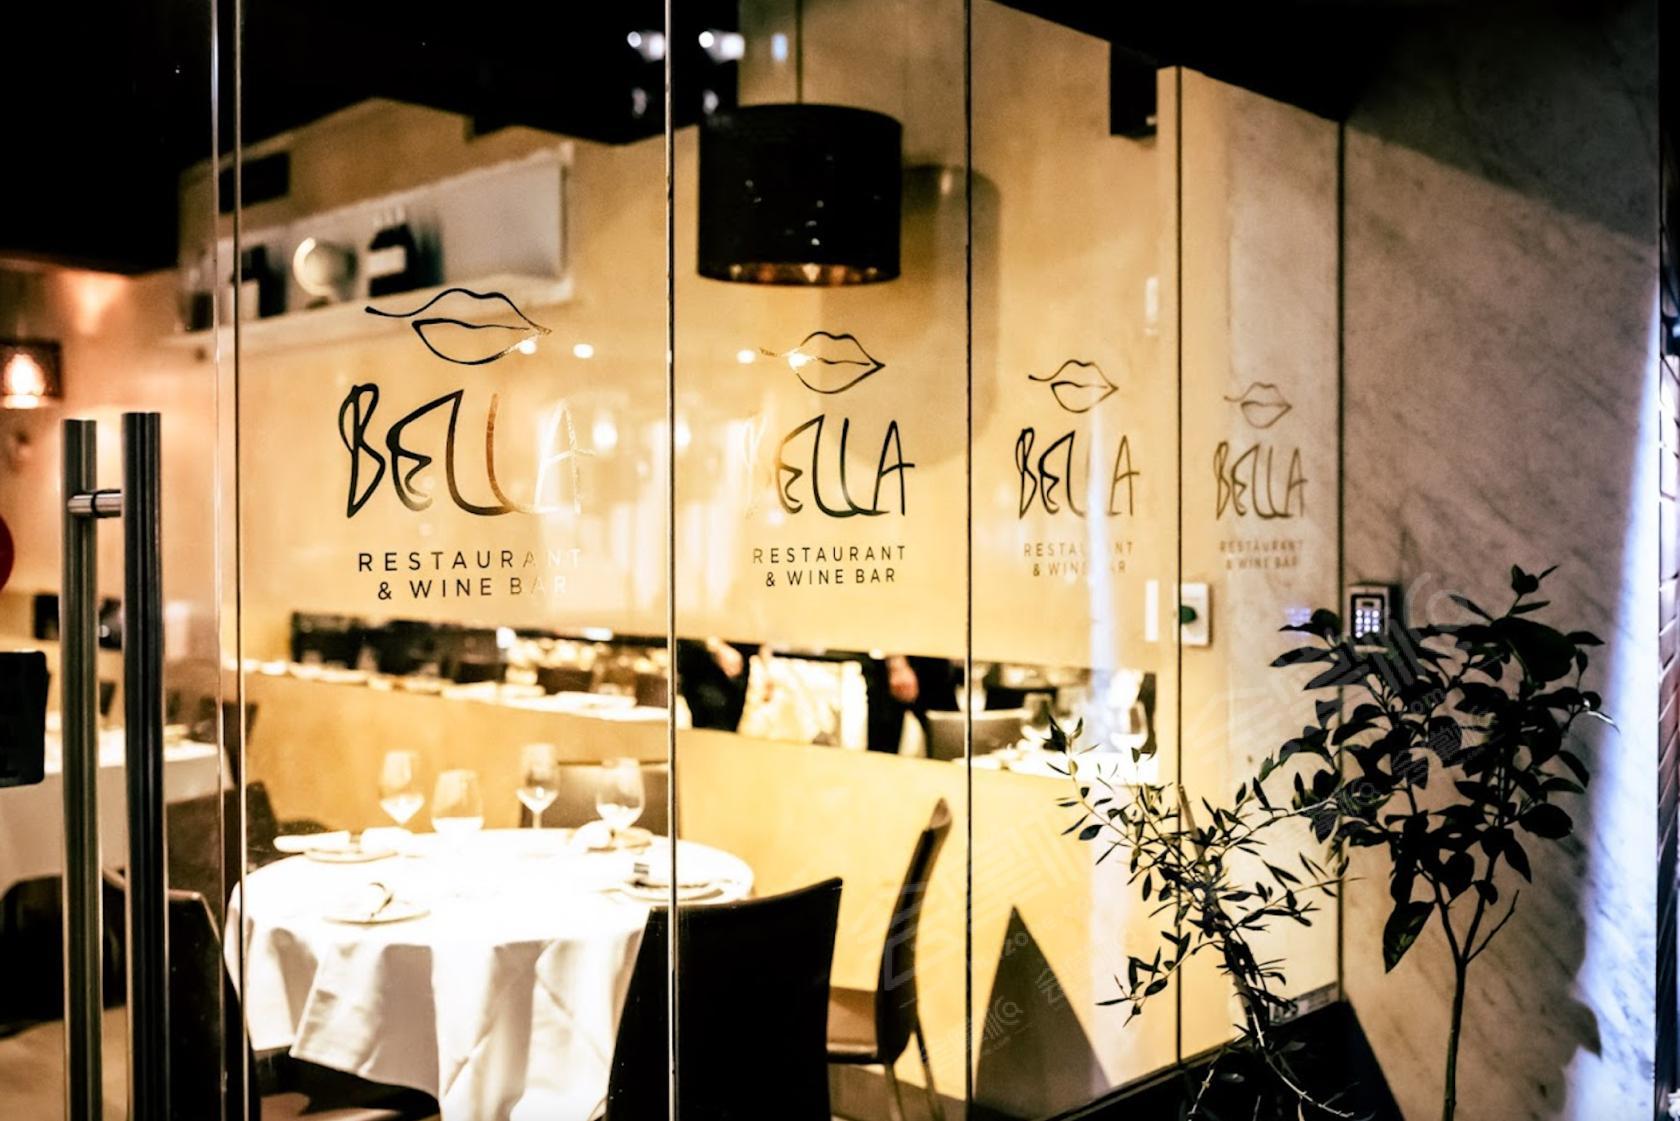 Bella Restaurant & Wine Bar